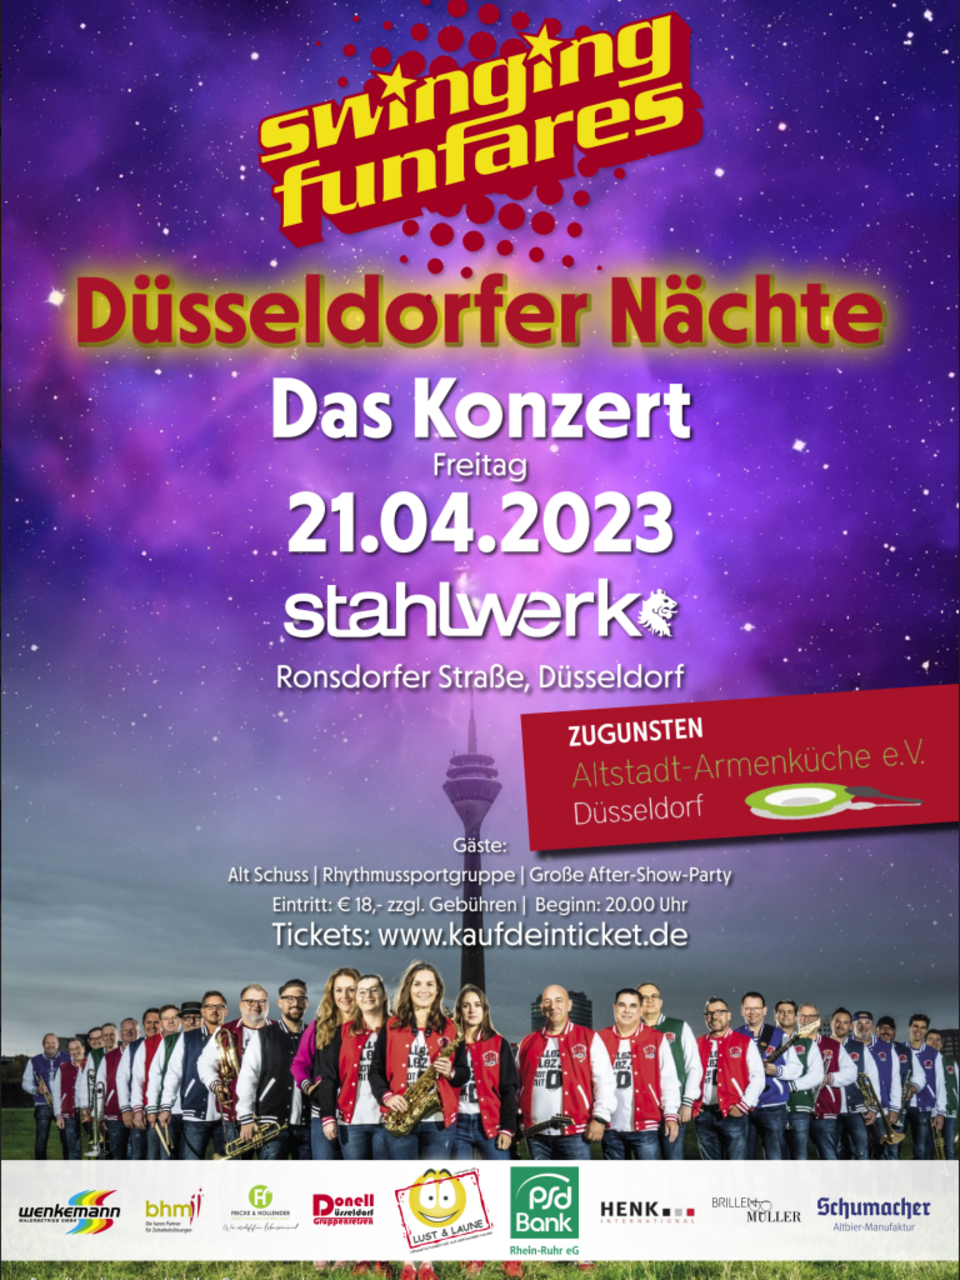 Düsseldorfer Nächte - Das Konzert